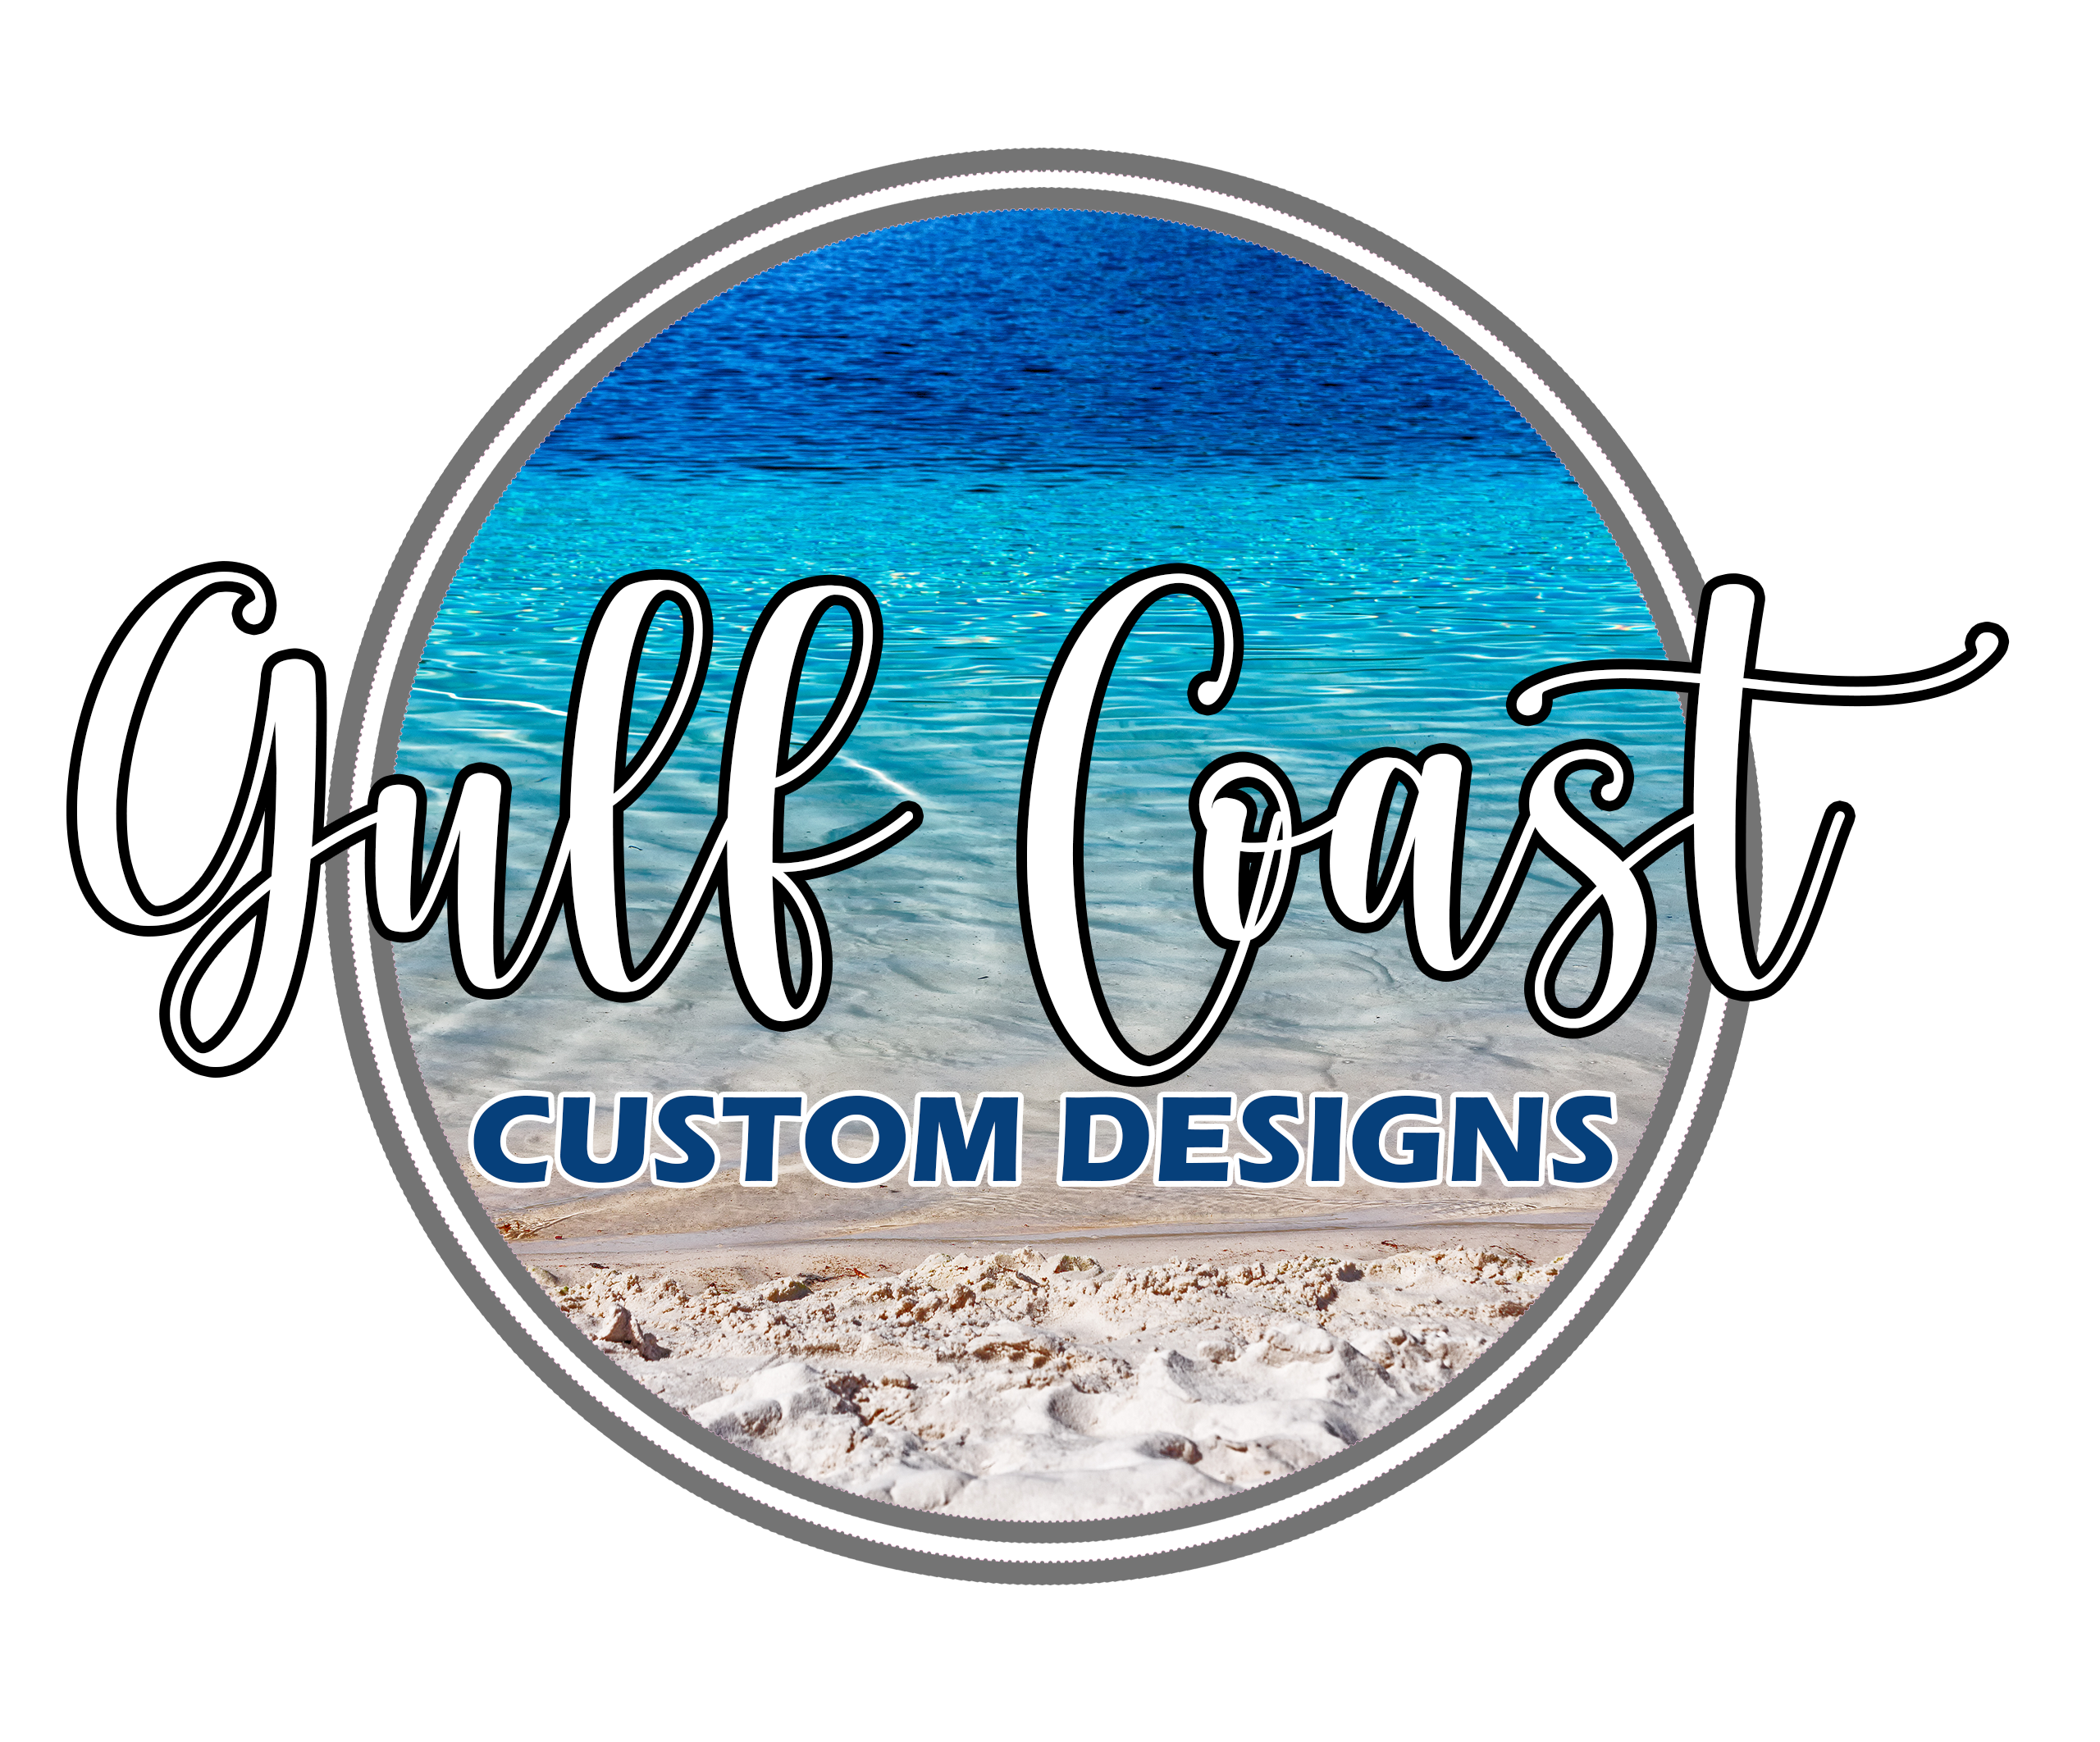 Gulf Coast Custom Designs logo showing circle with blue water